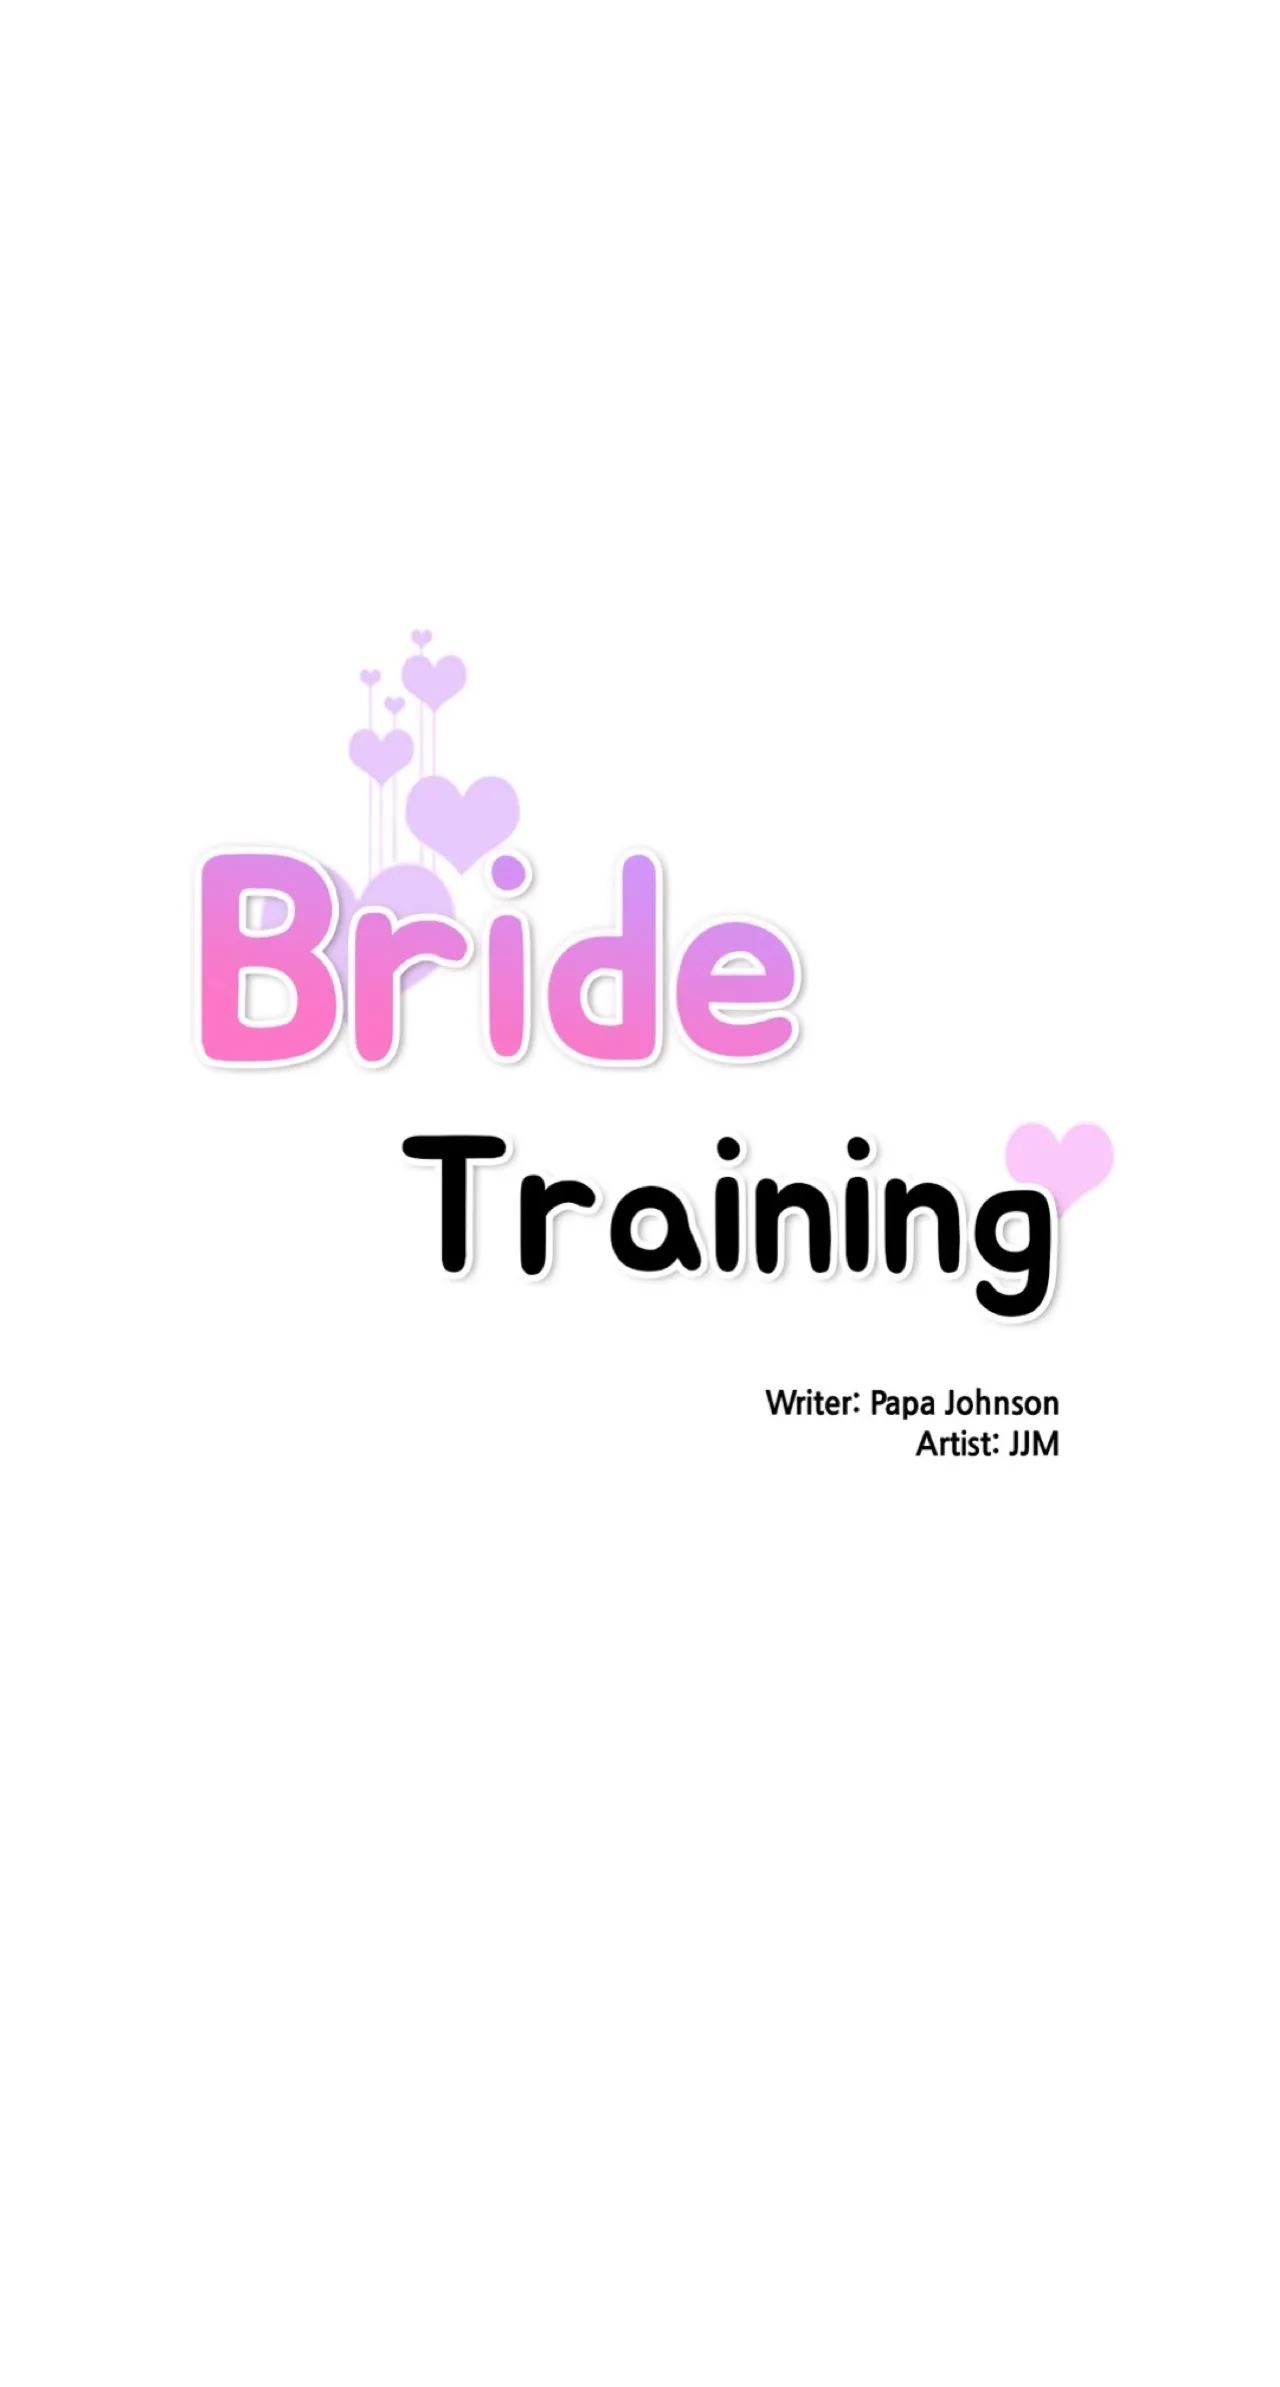 Bride Training image